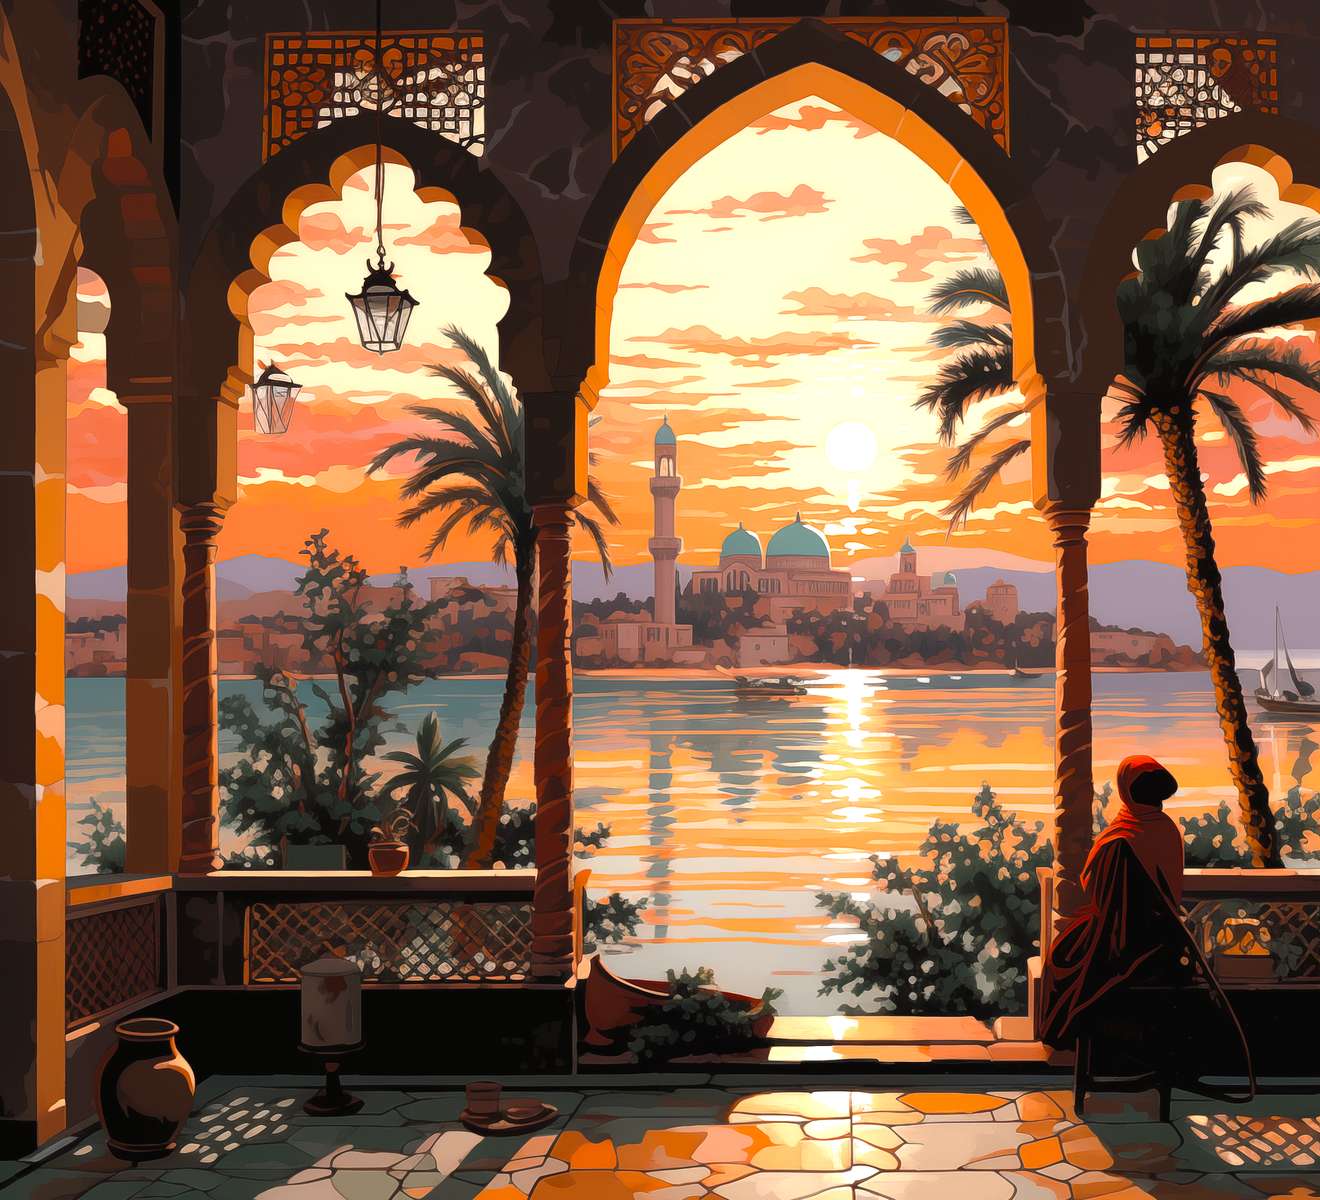 City at sunset - Arabian landscape jigsaw puzzle online